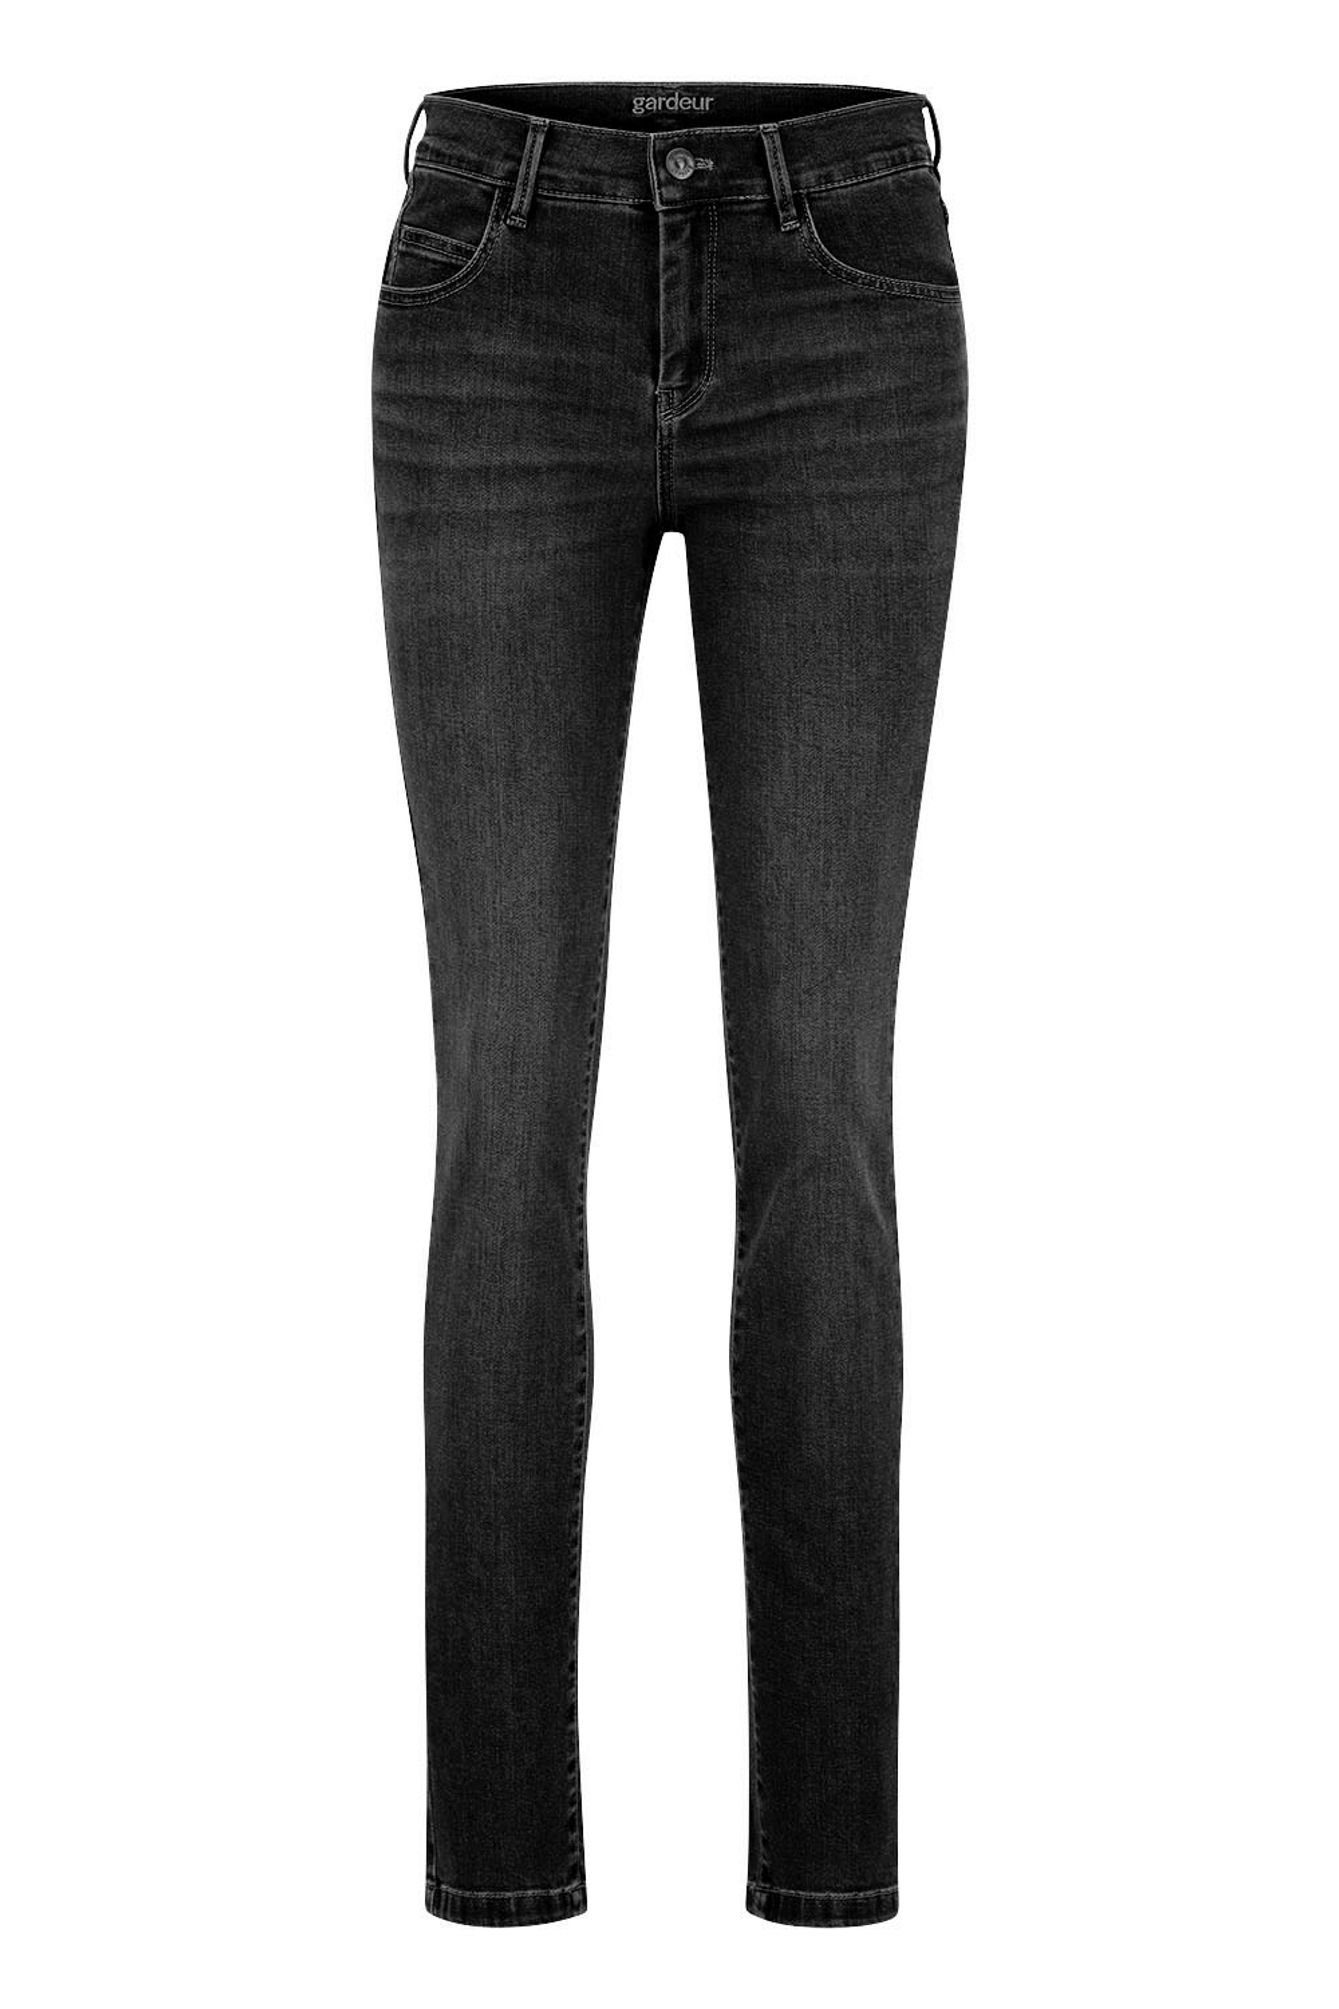 Atelier GARDEUR 5-Pocket-Jeans 670721 black (7799)